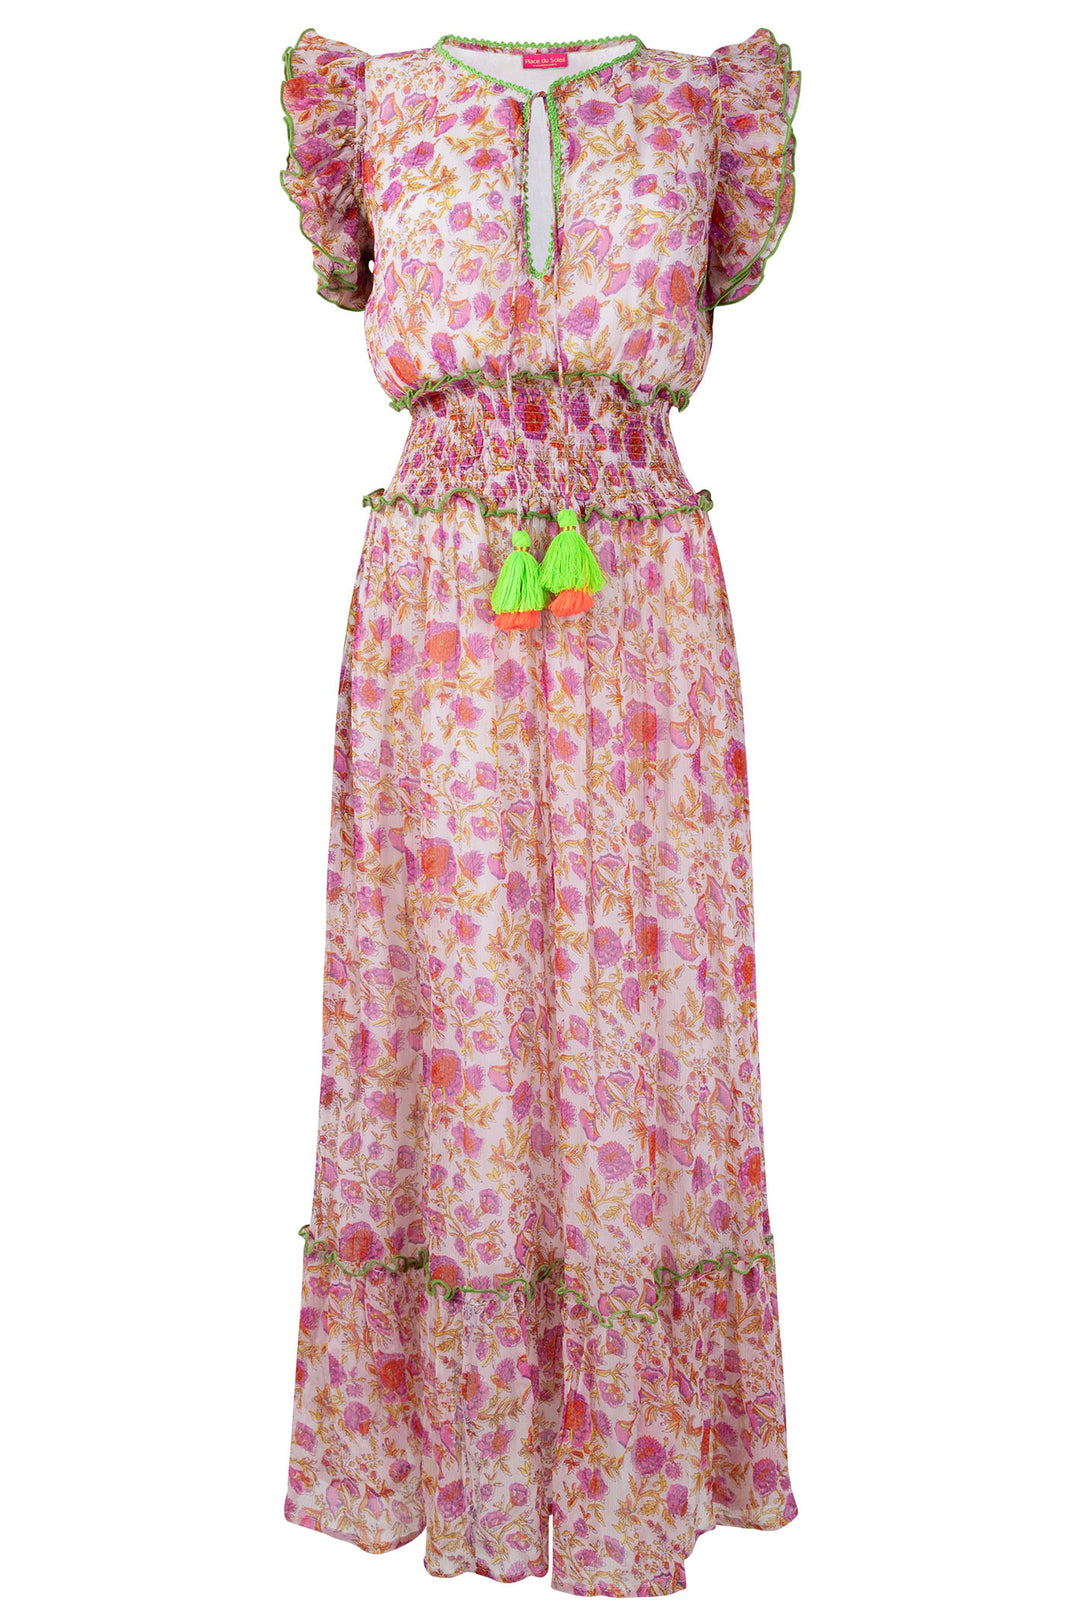 Place du Soleil S24 406 Pink Floral Print Ruffle Sleeve Dress - Olivia Grace Fashion